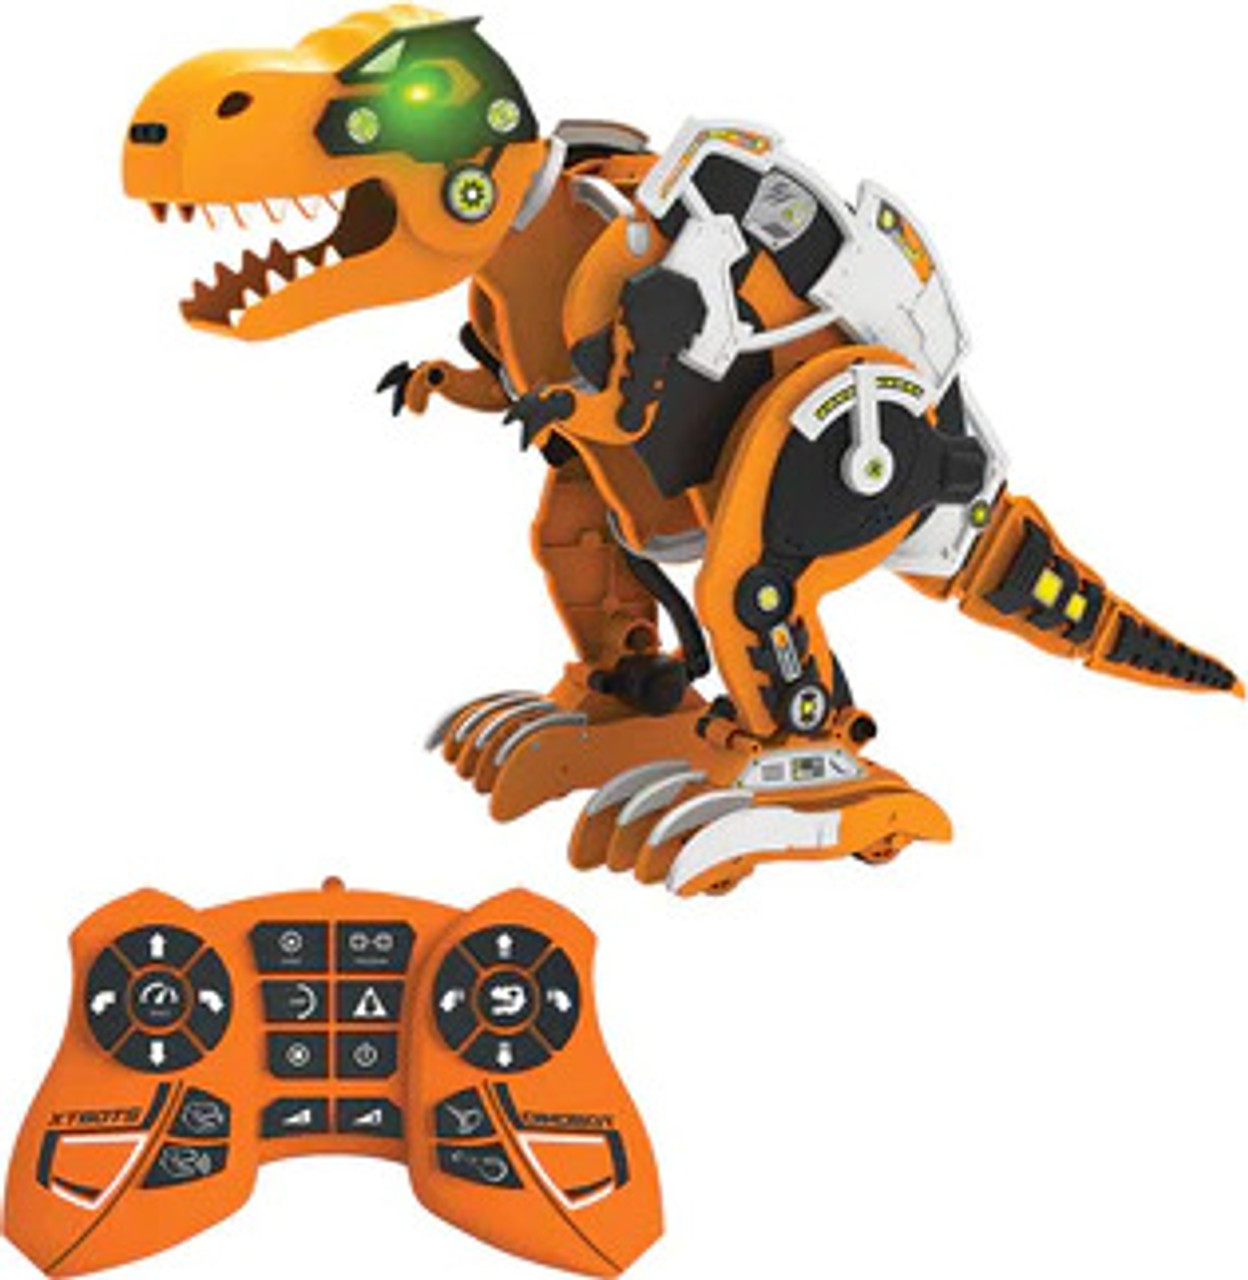 Code+Control Dinosaur Robot: REX 4